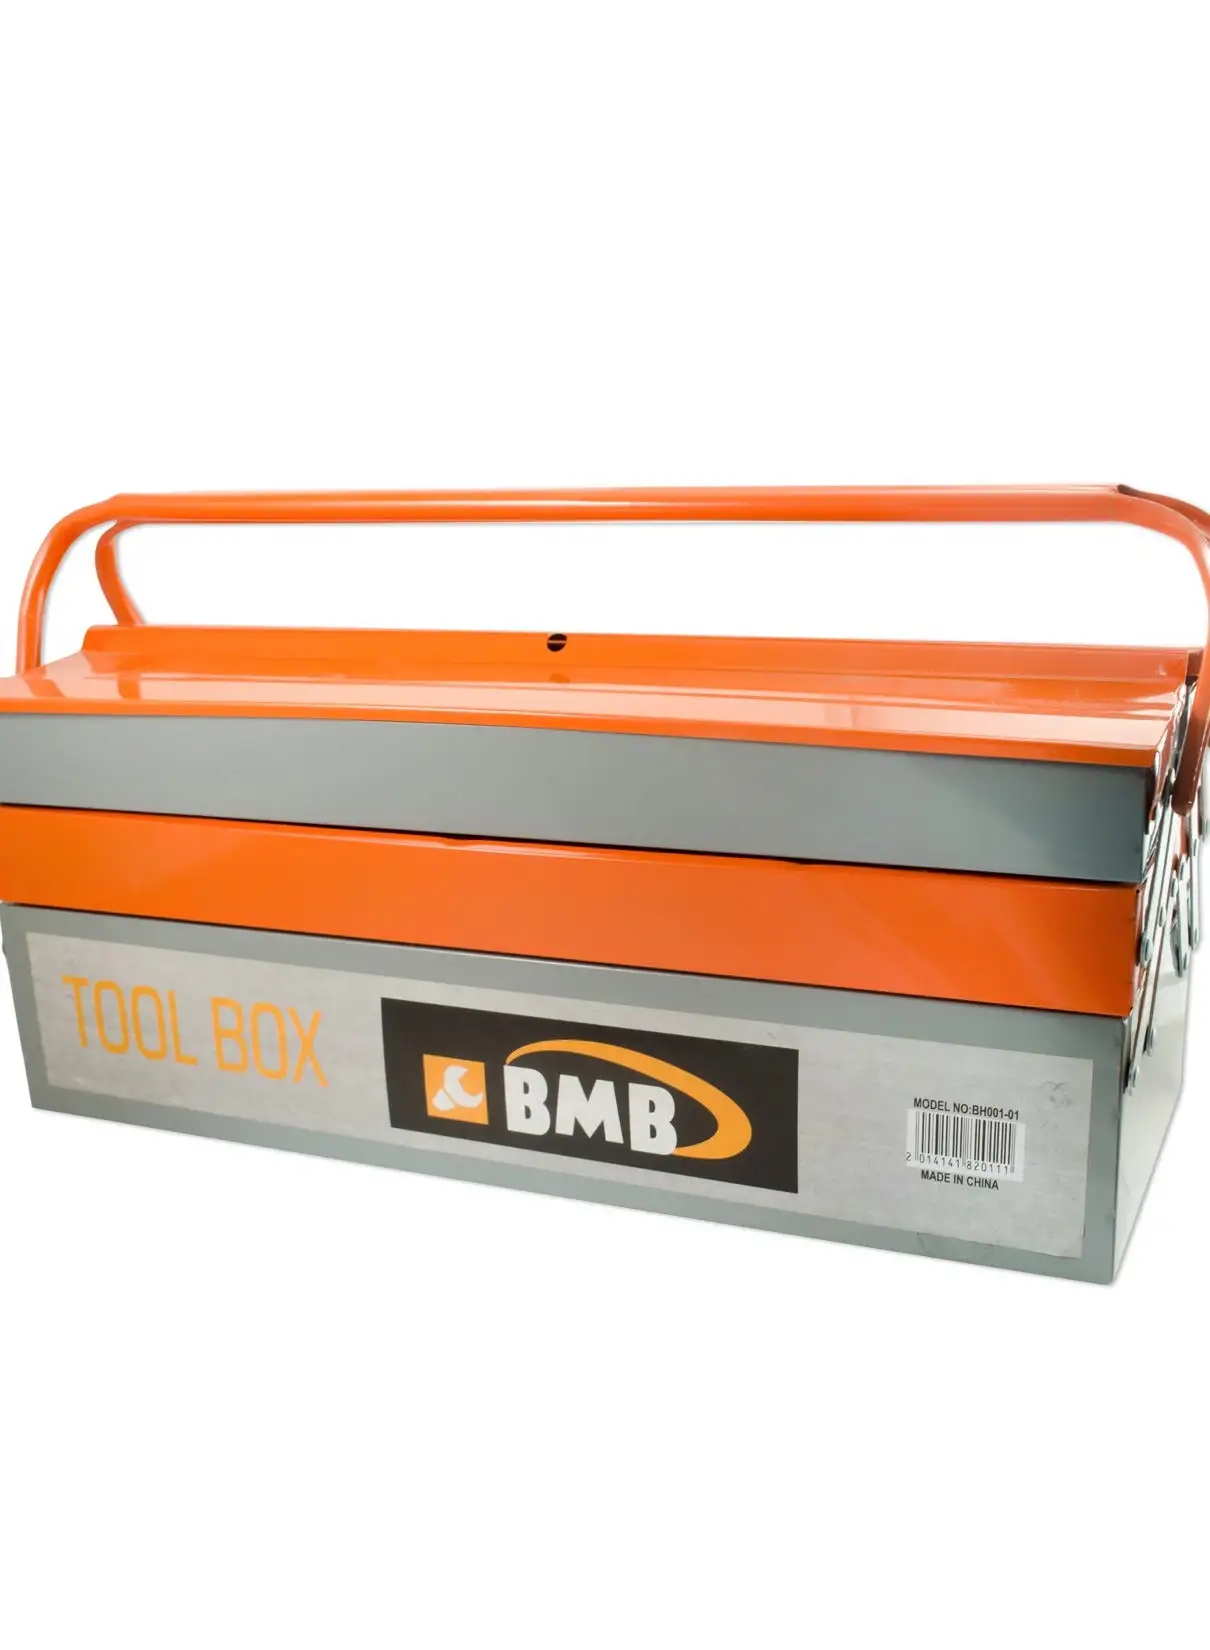 BMB tools Heavy Duty Metal Toolbox | Heavy Duty Portable Tool Box with Organizer Tray and Handle